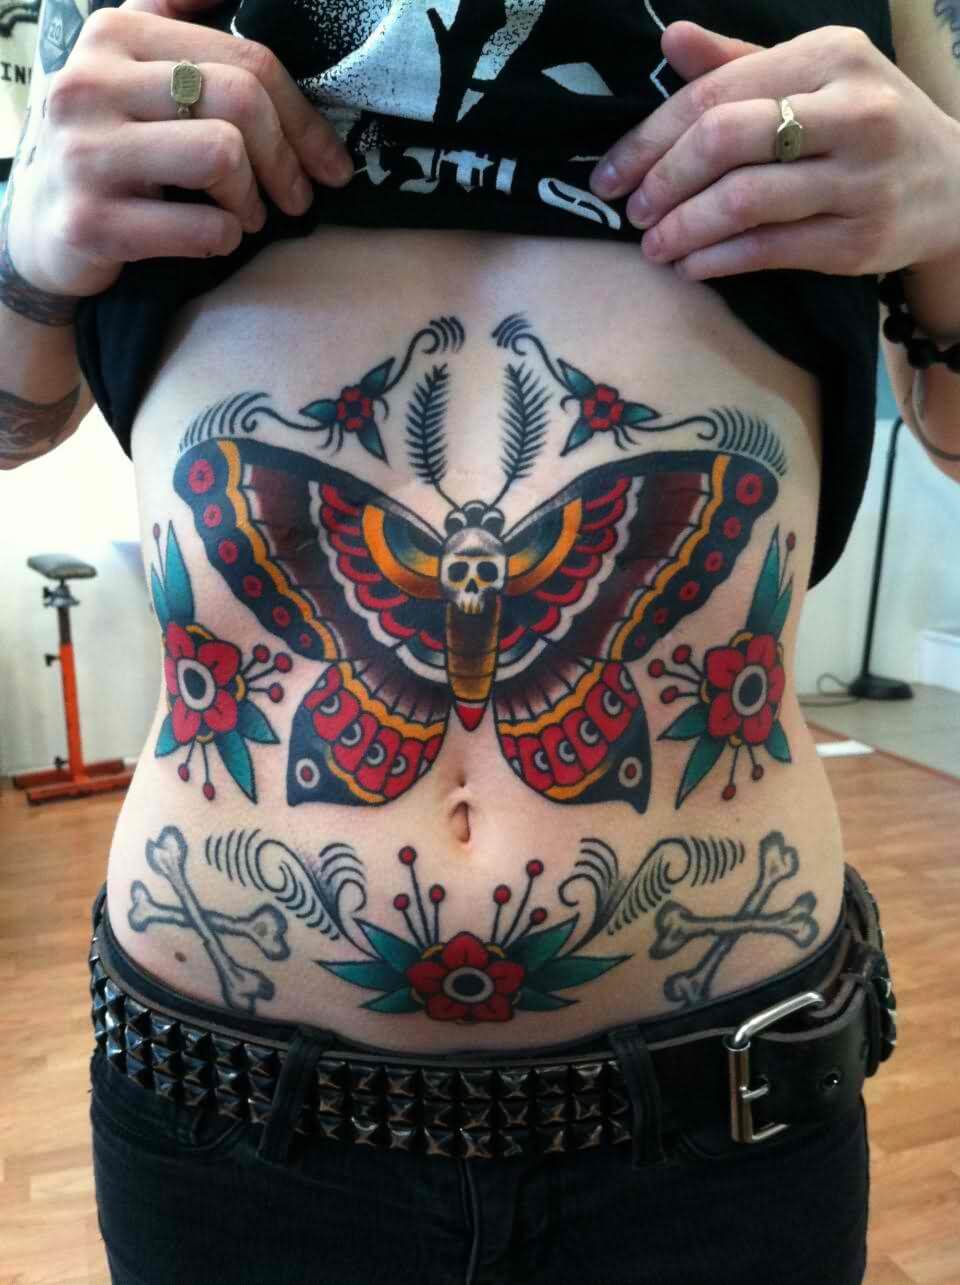 Tattoo Placement on Abdomen